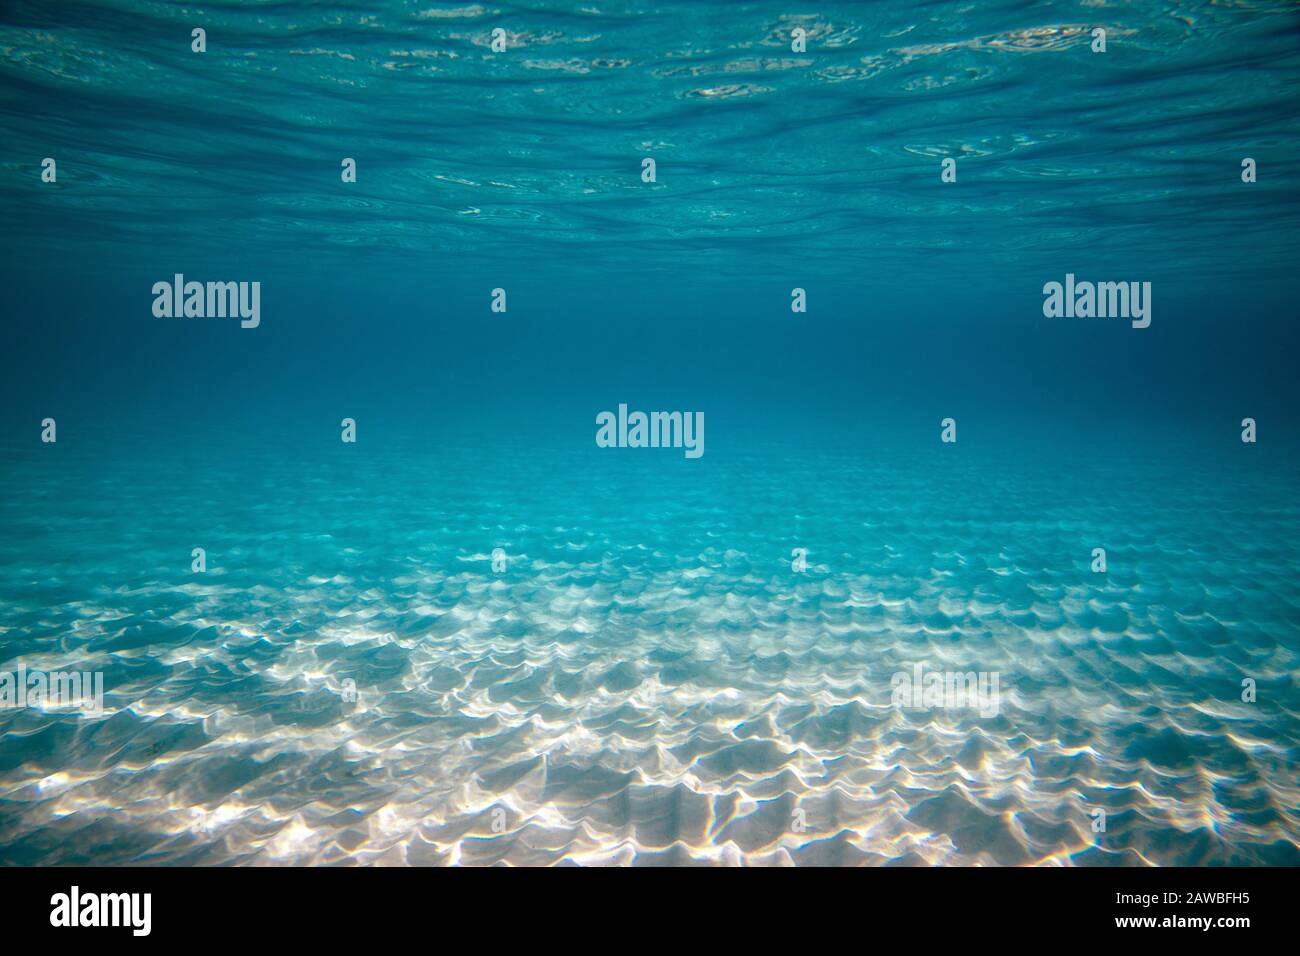 Empty underwater ocean bottom background with copy space Stock Photo